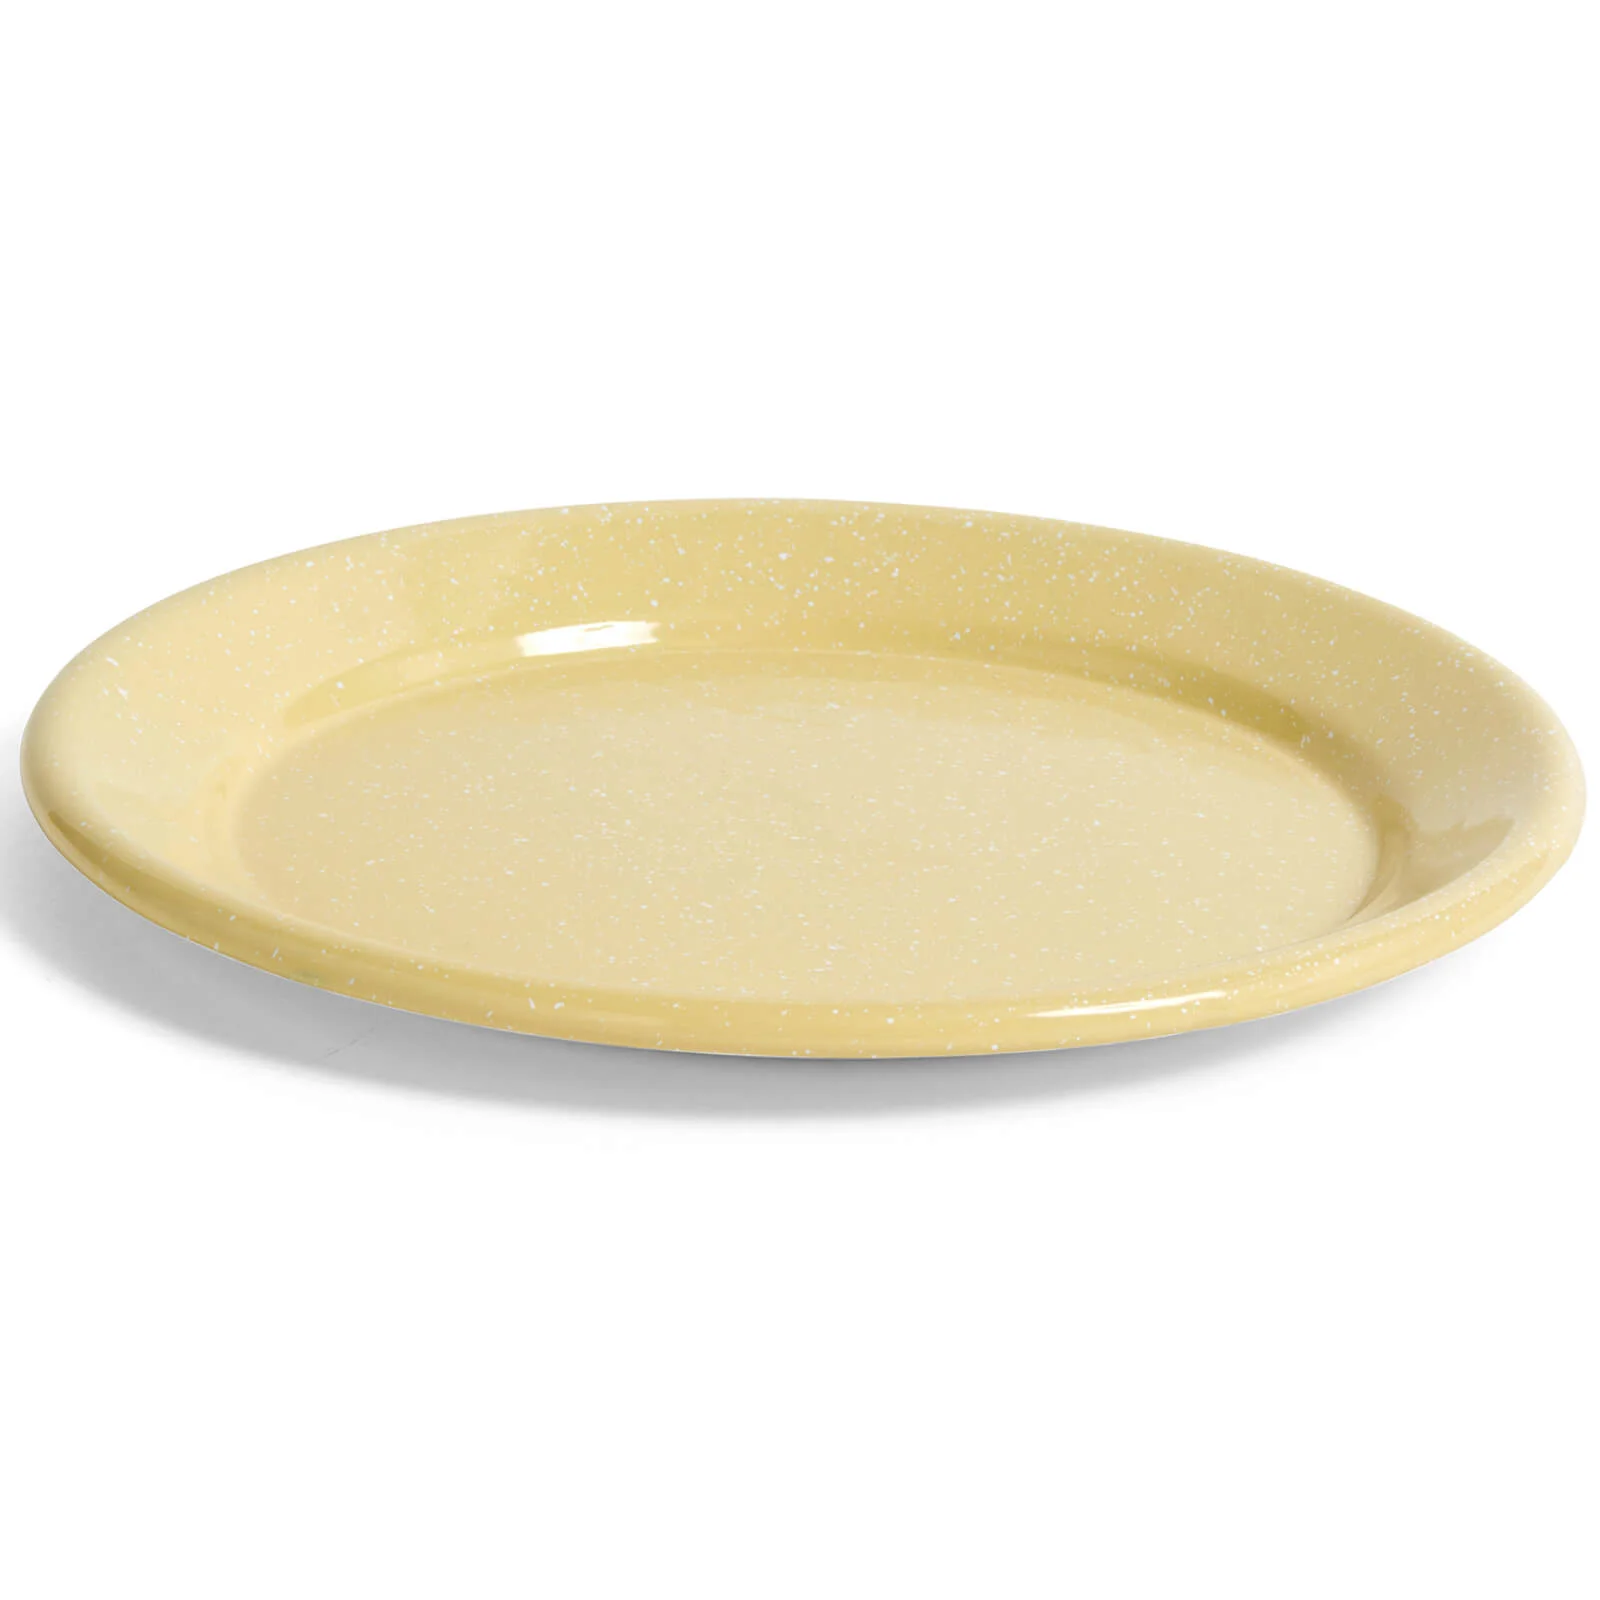 HAY Enamel Dinner Plate - Light Yellow Image 1